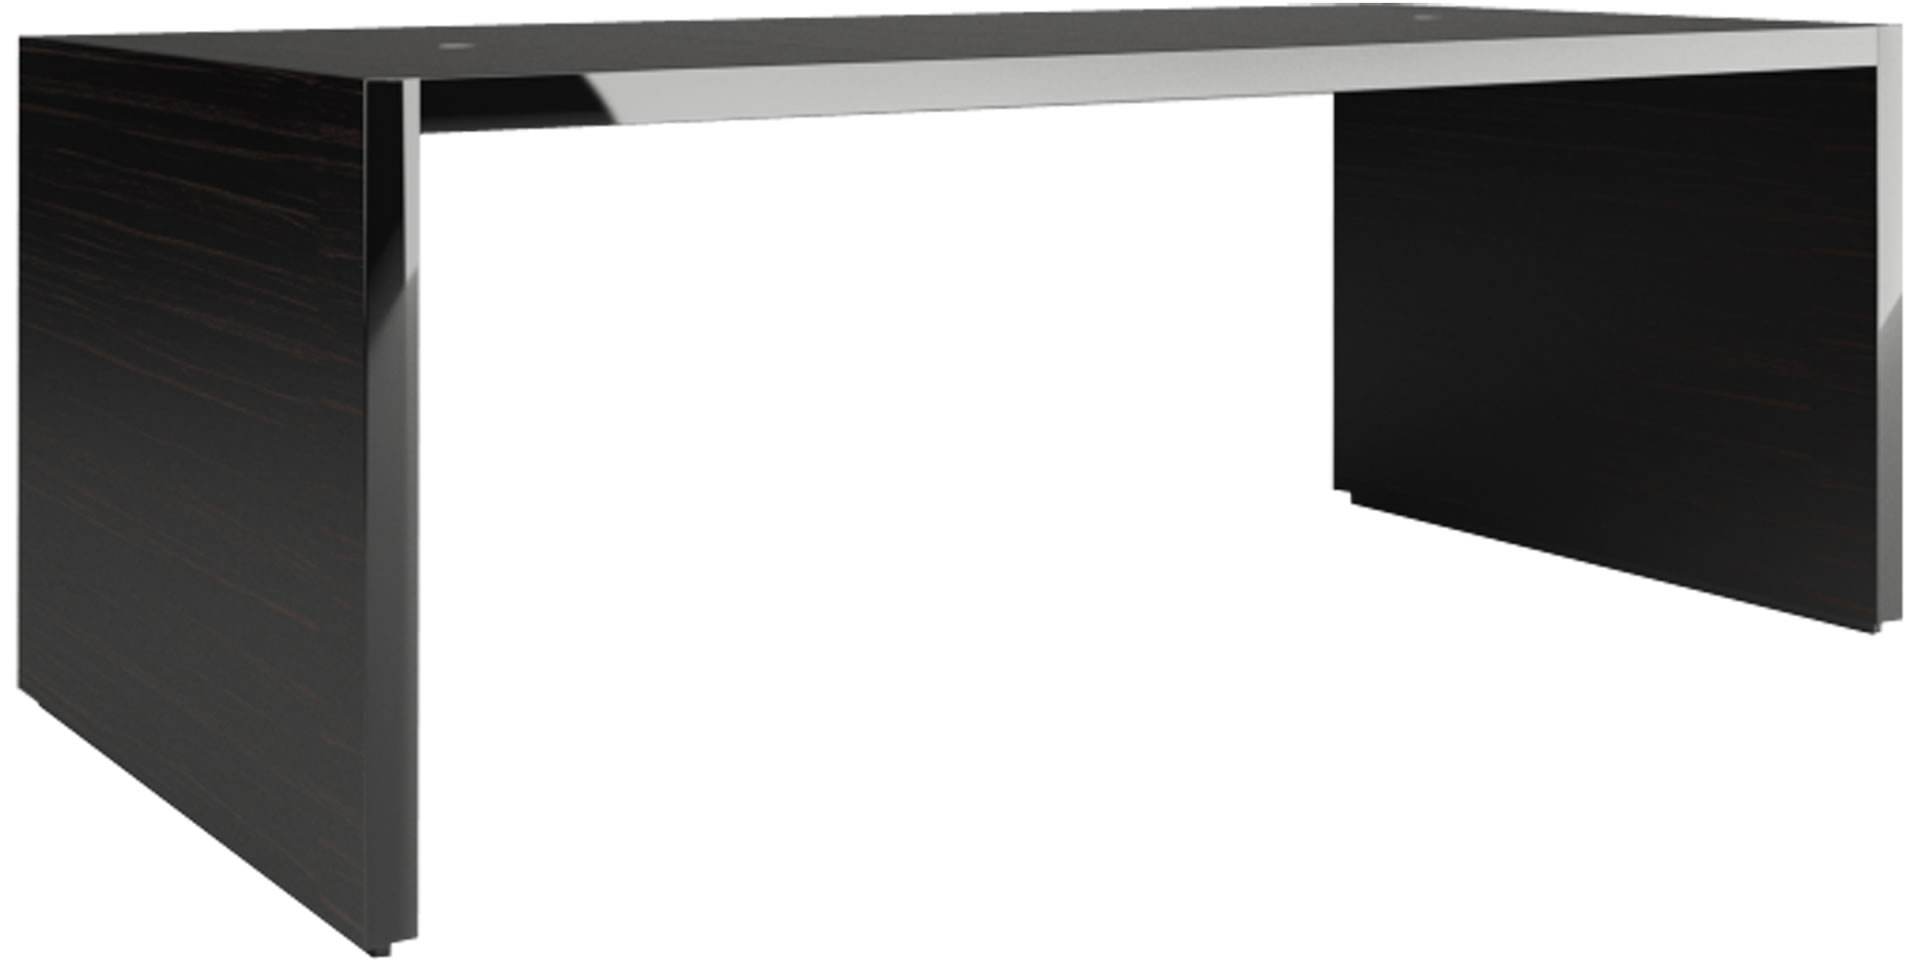 Tisch wangen-tisch dunkles Ebenholz modern edel